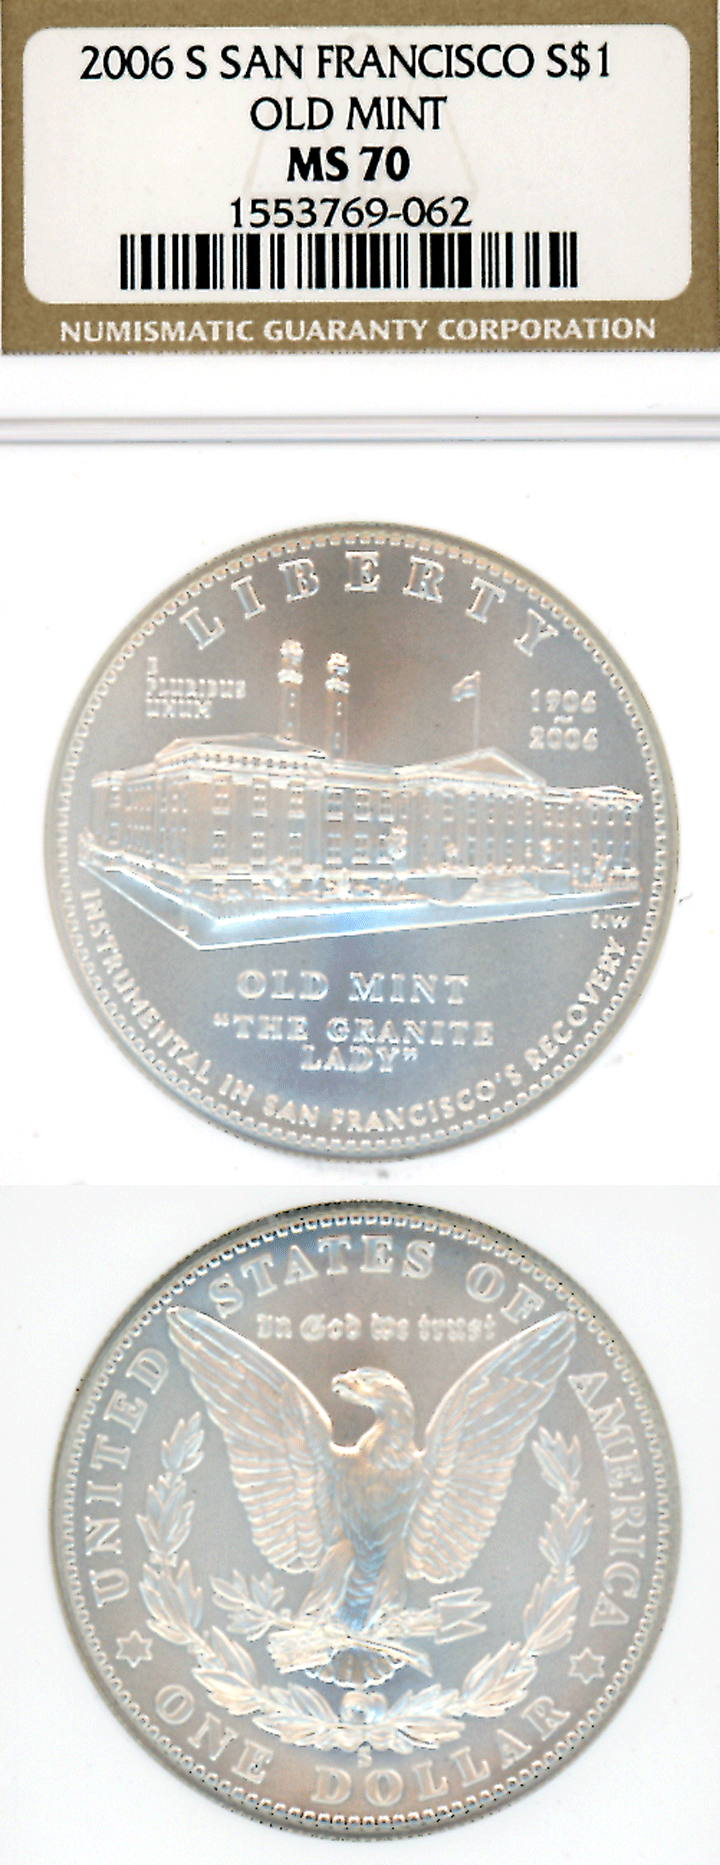 2006-S San Francisco Old Mint $ NGC MS 70 US silver dollar commem